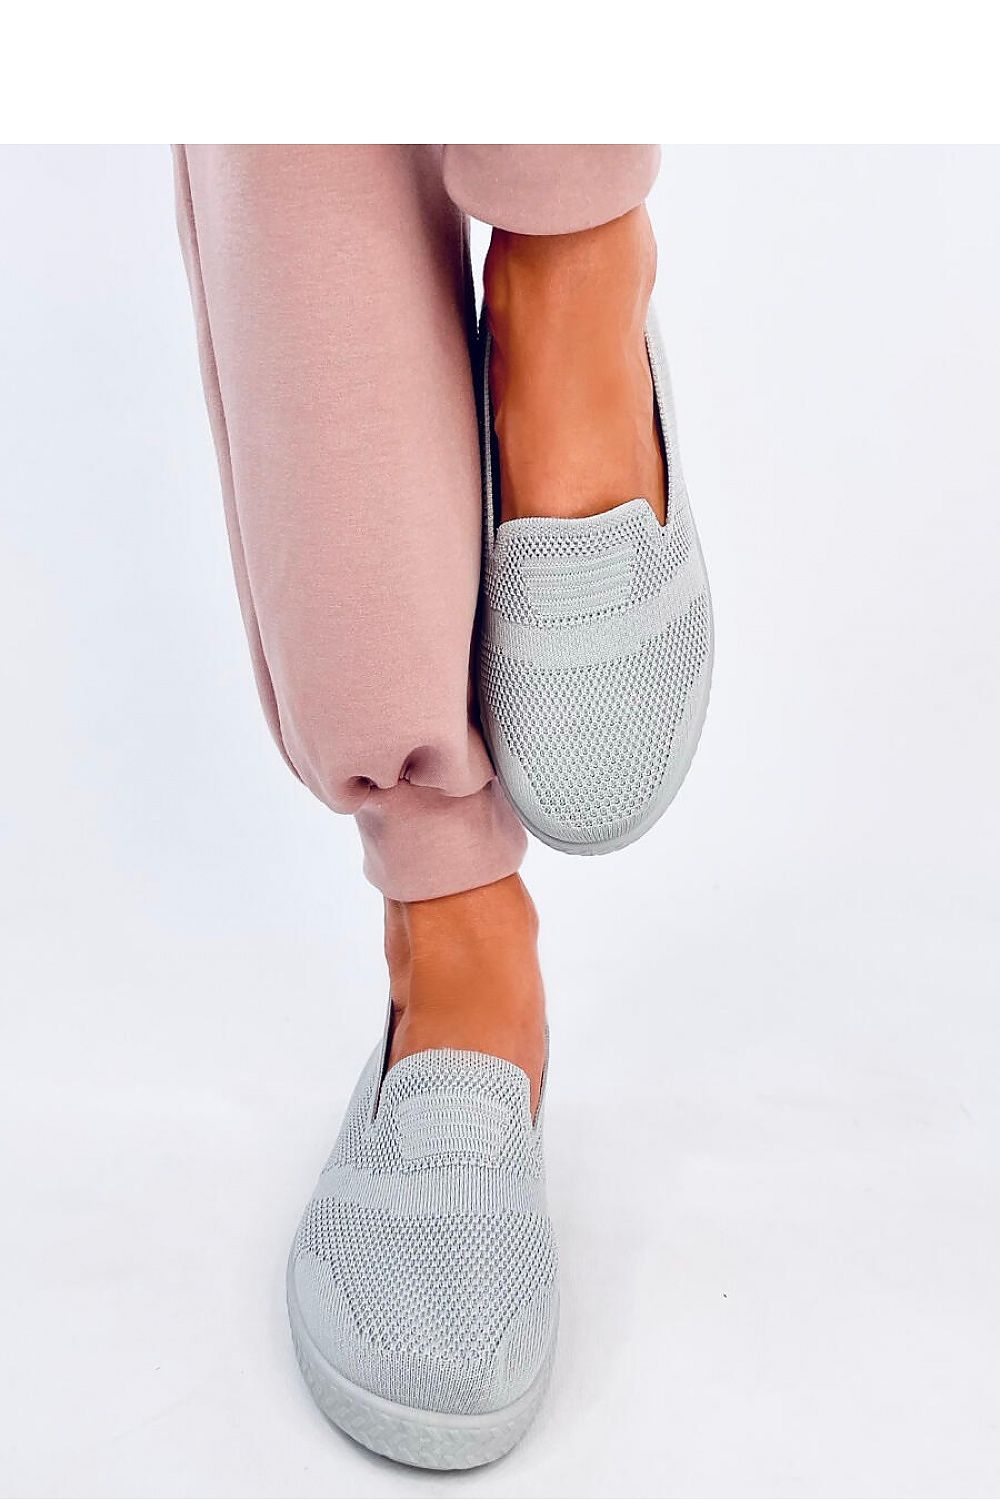 TEEK - Grey Slip-On Fabric Loafers SHOES TEEK MH   